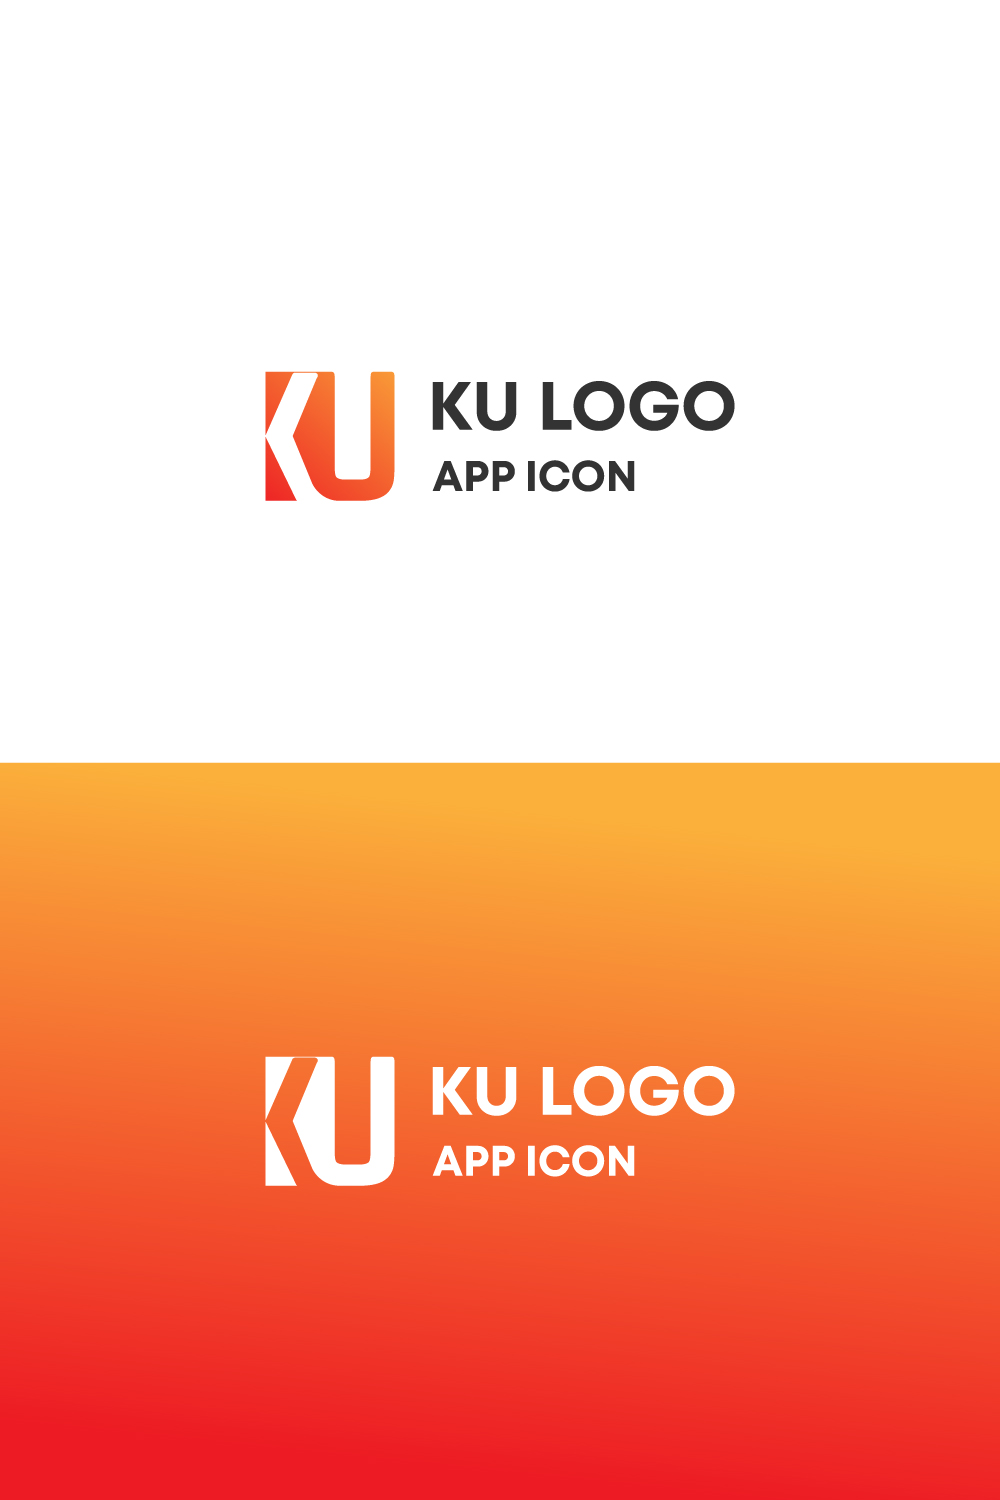 KU logo pinterest preview image.